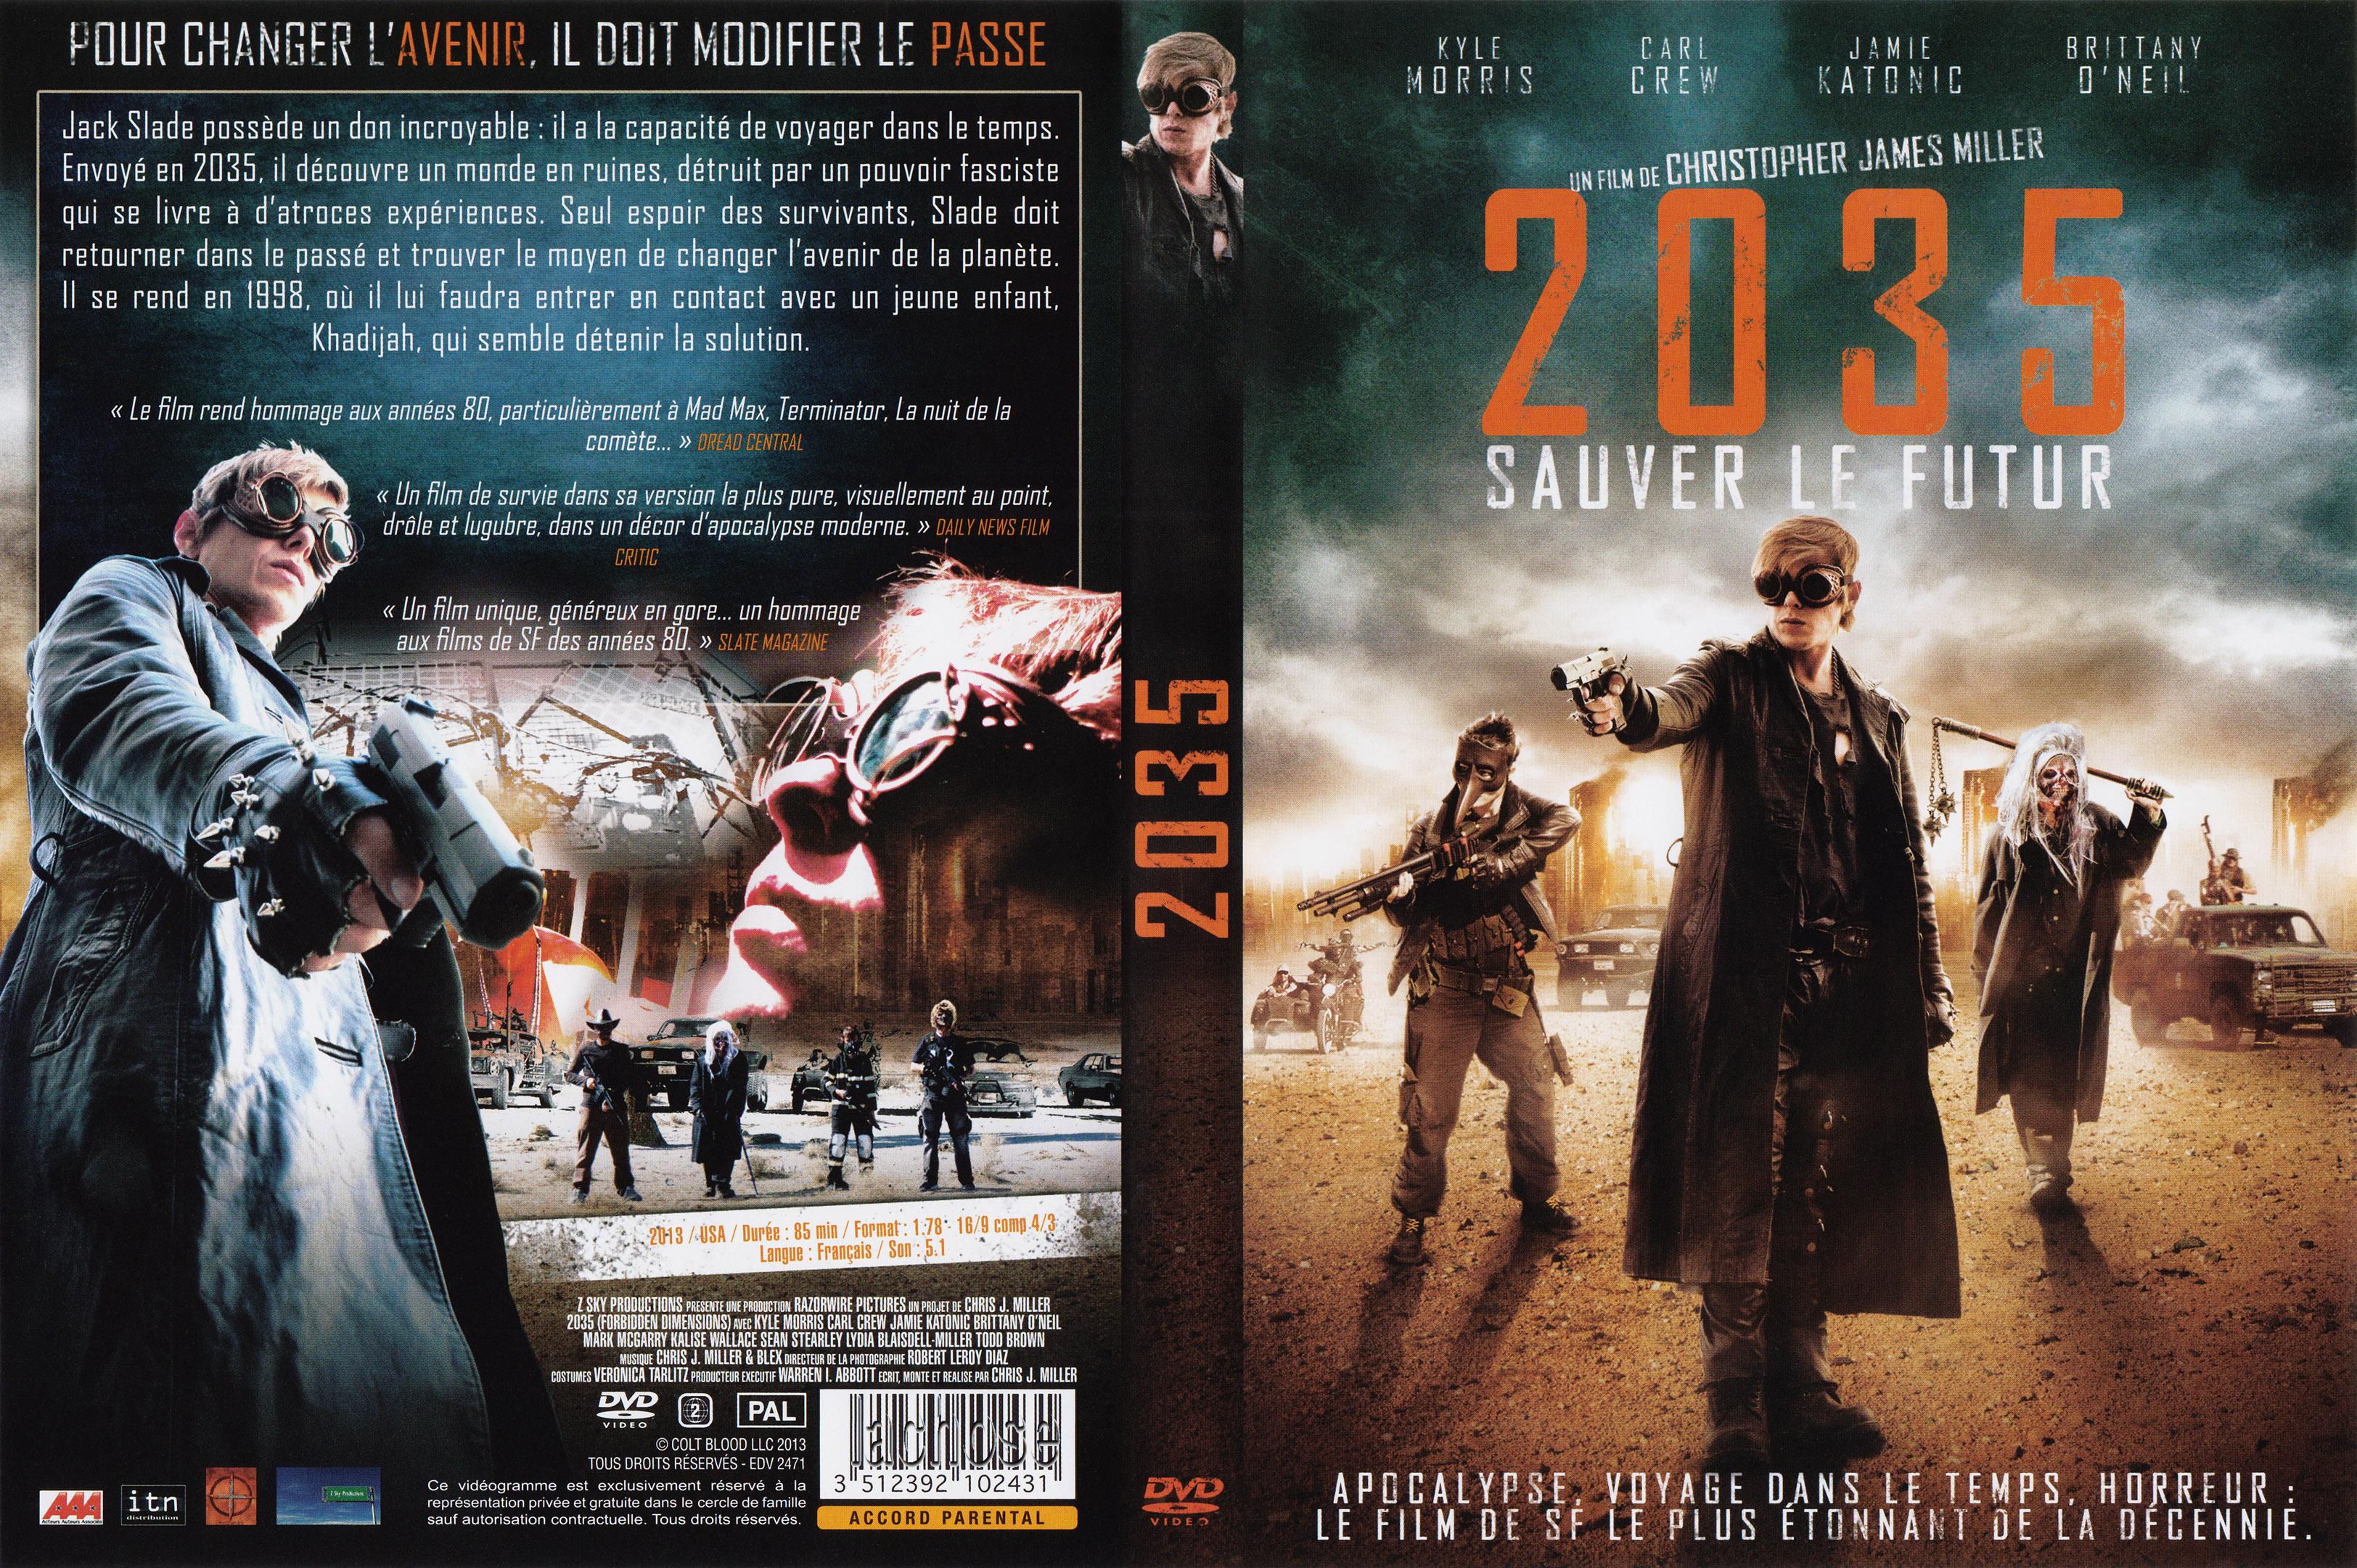 Jaquette DVD 2035 sauver le futur